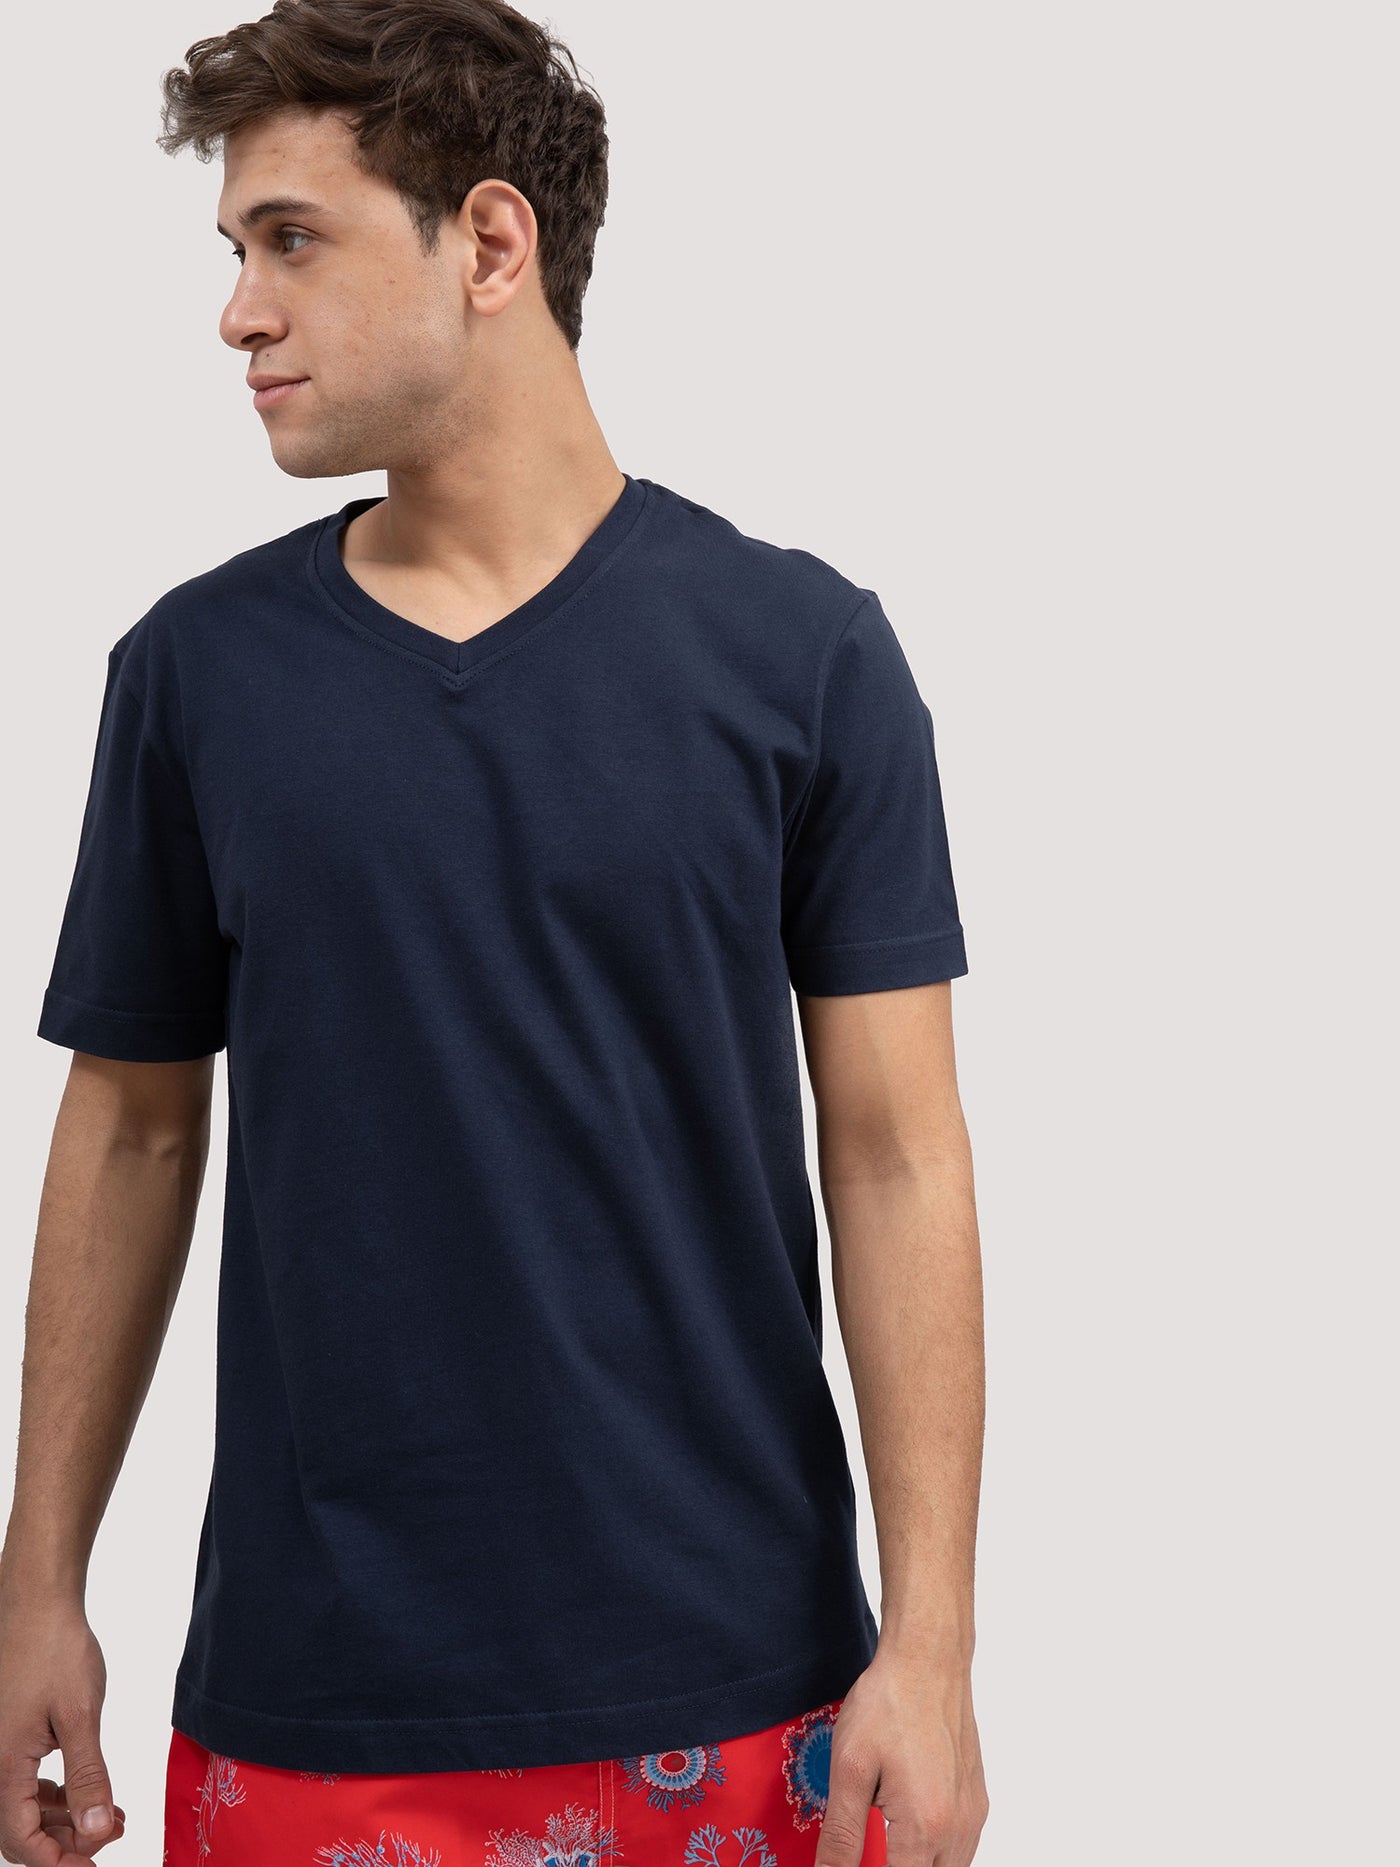 Premoda Mens Plain T-Shirt